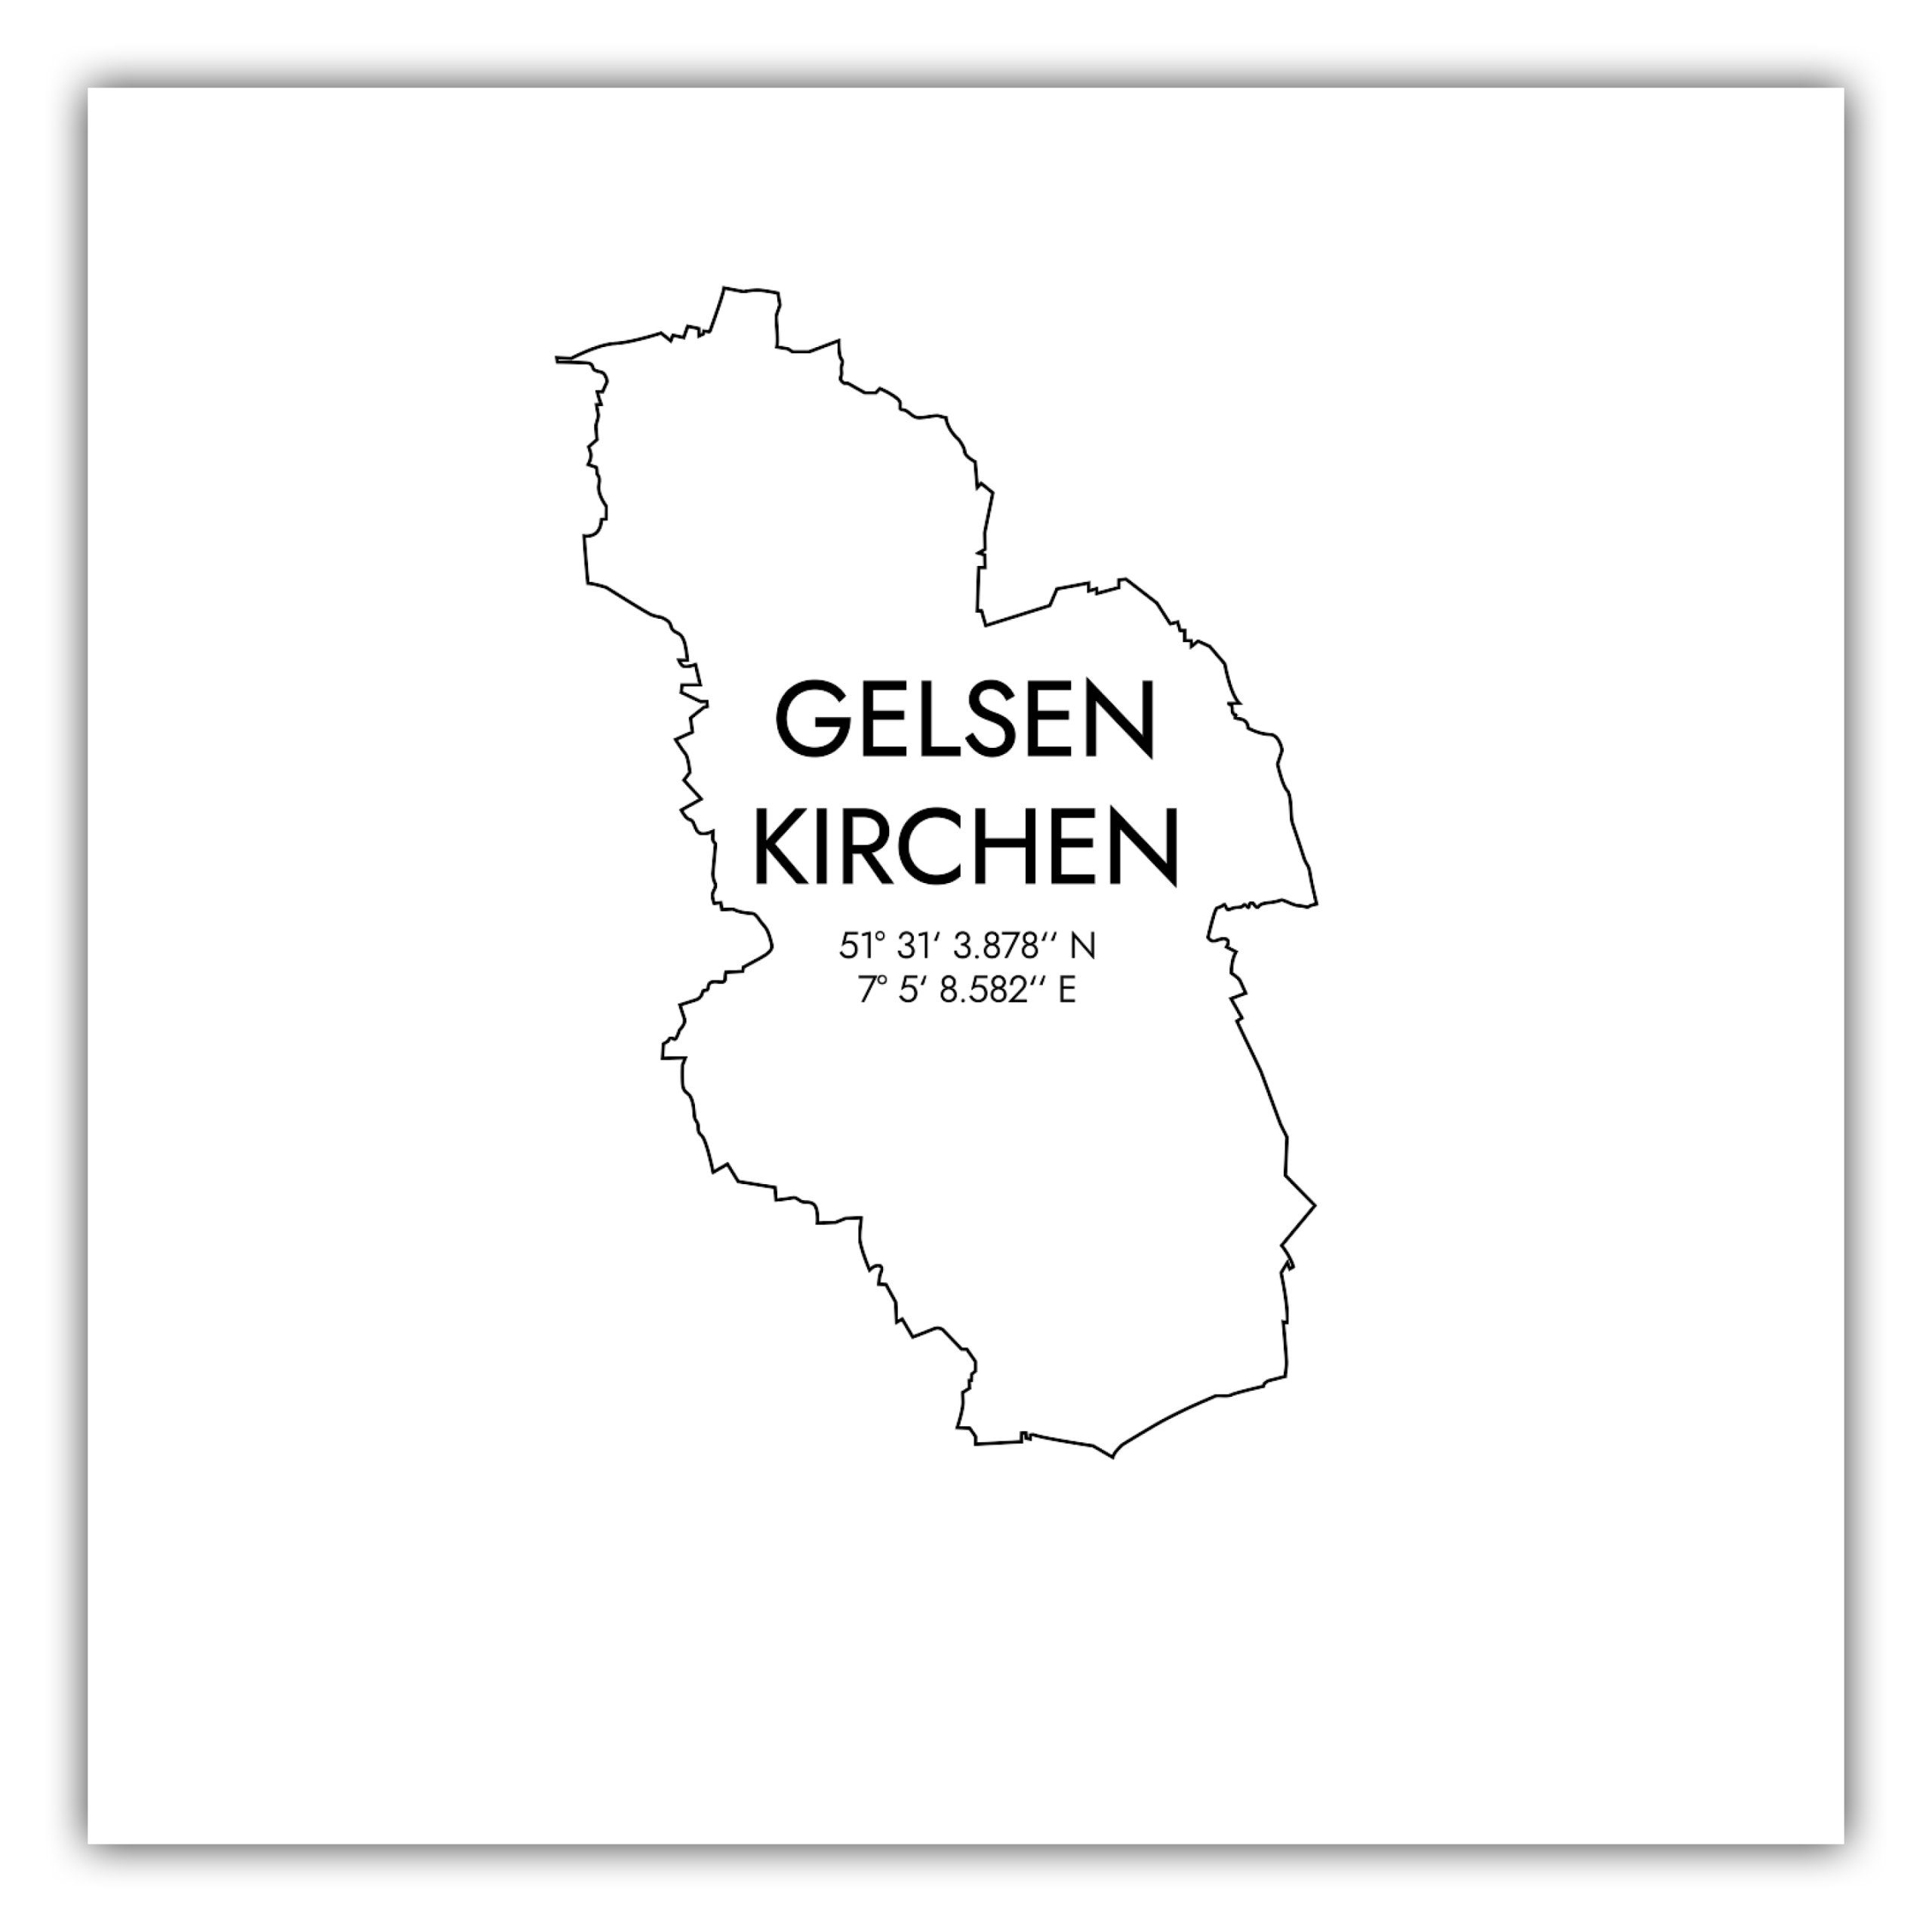 MOTIVISSO Poster Gelsenkirchen Koordinaten #7